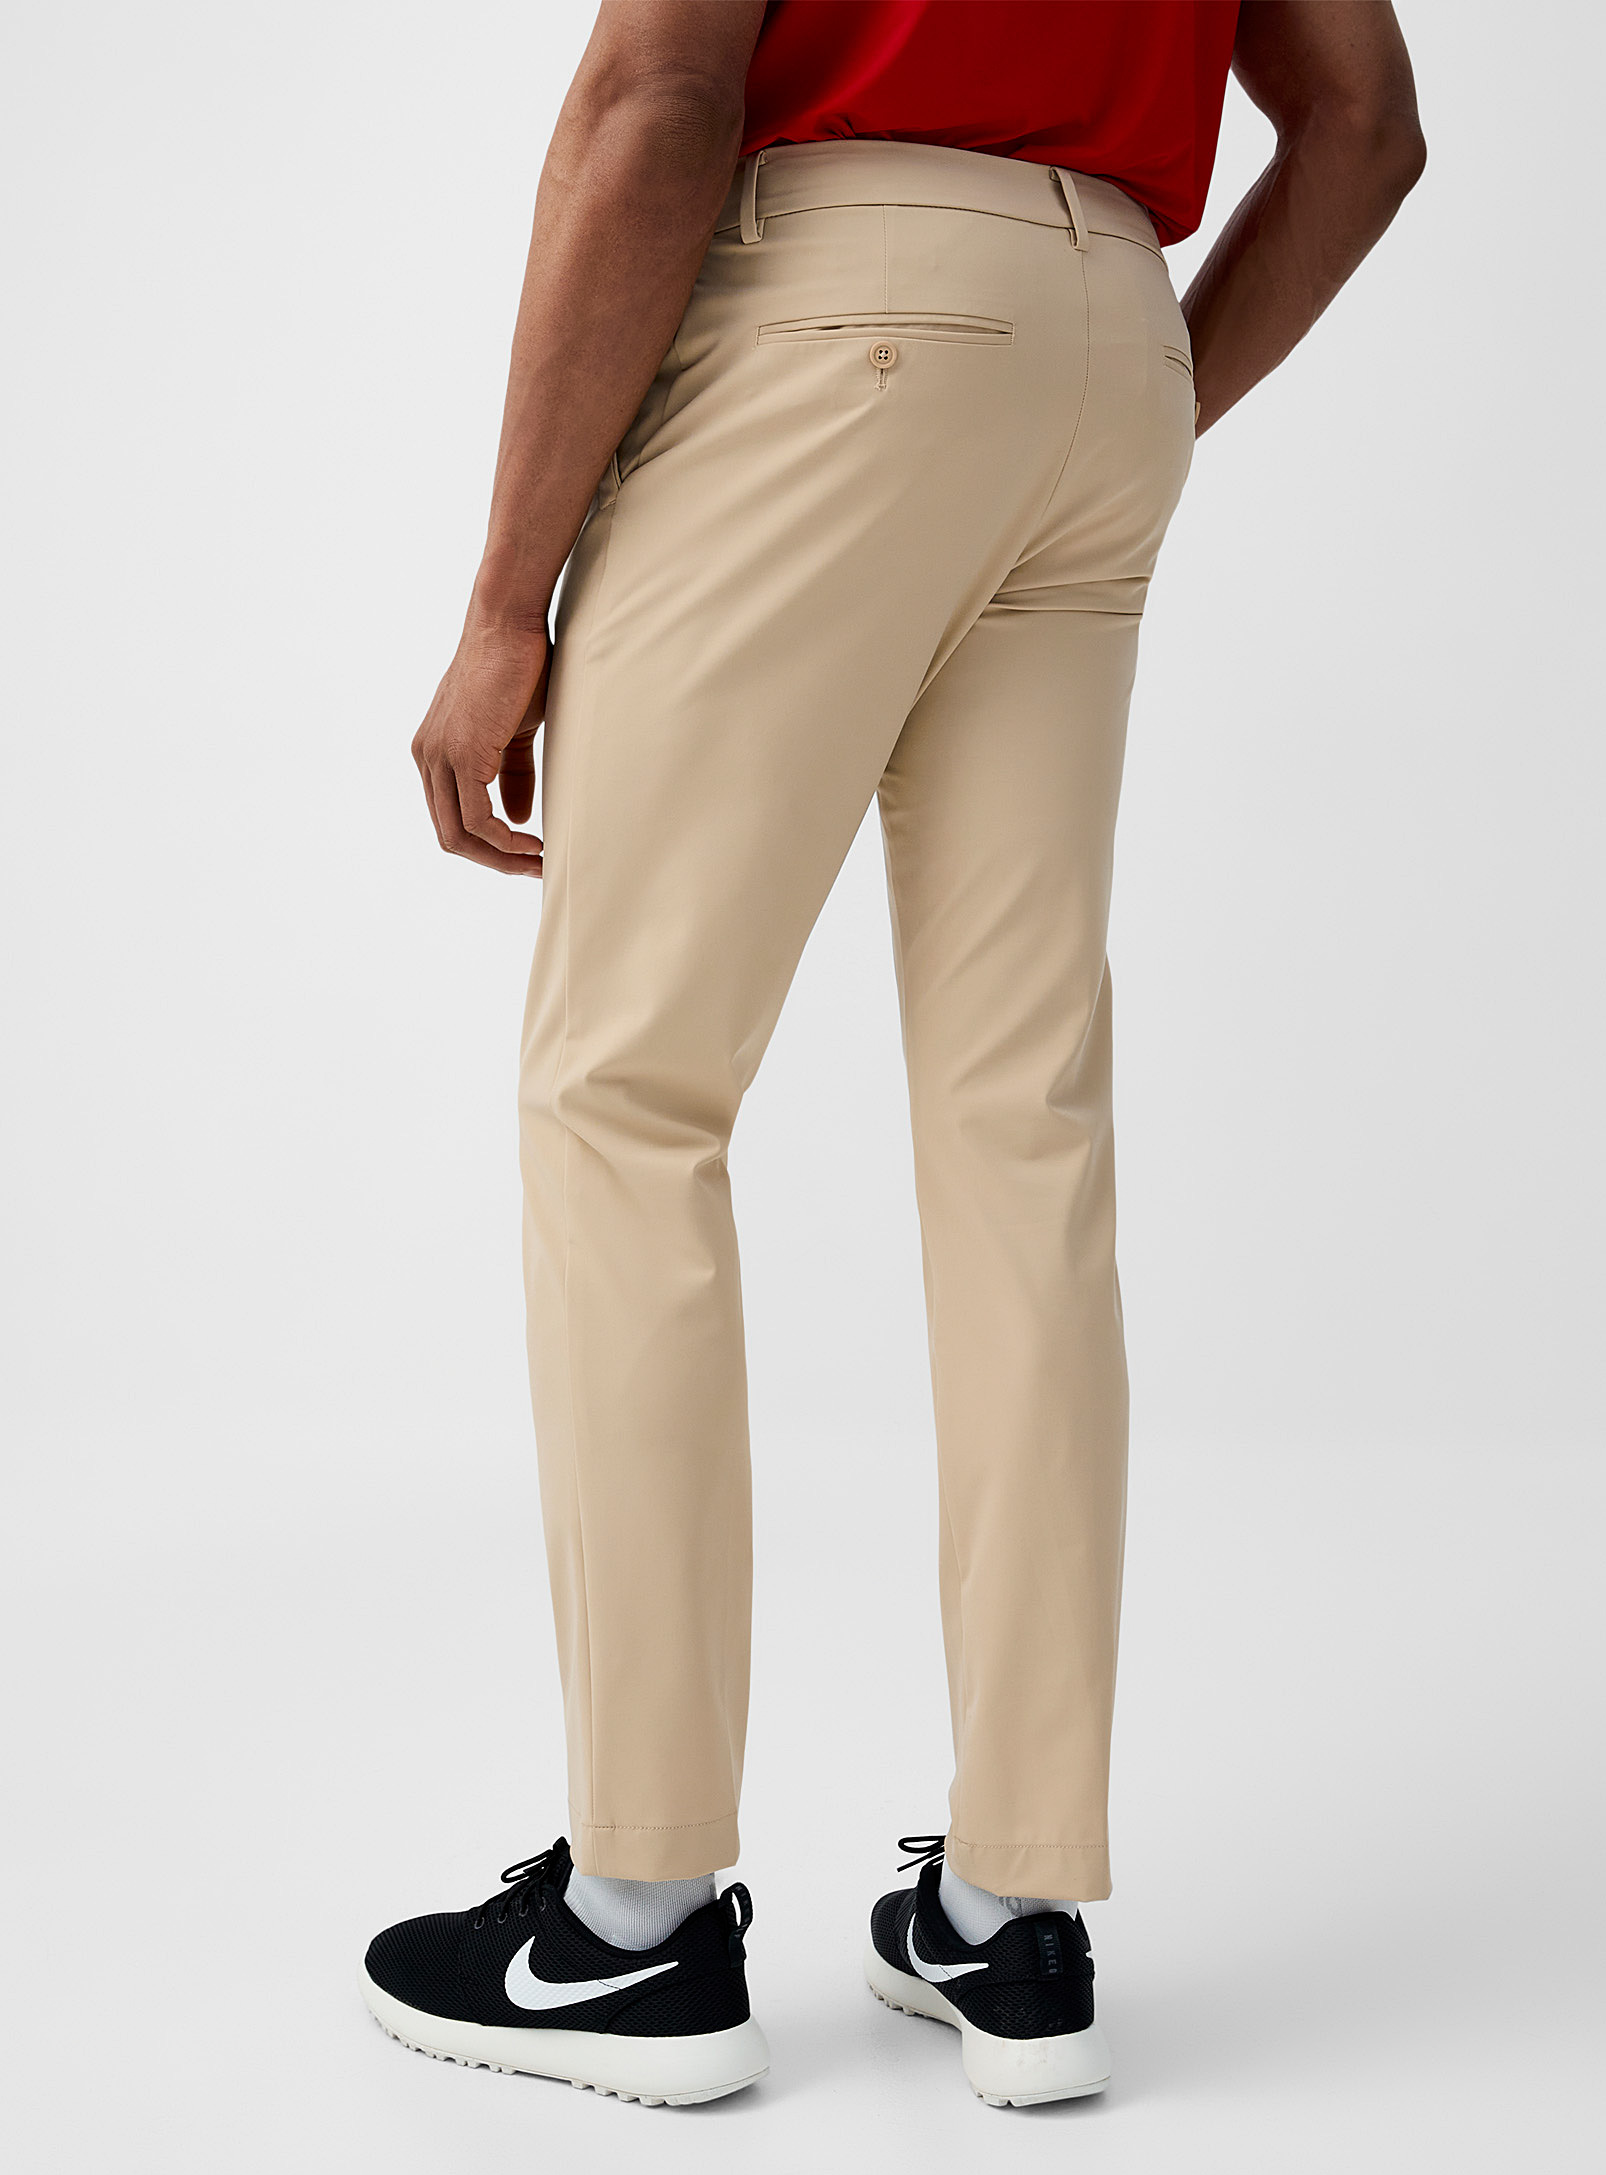 Tilley - Le pantalon de golf extensible jambe fuselée